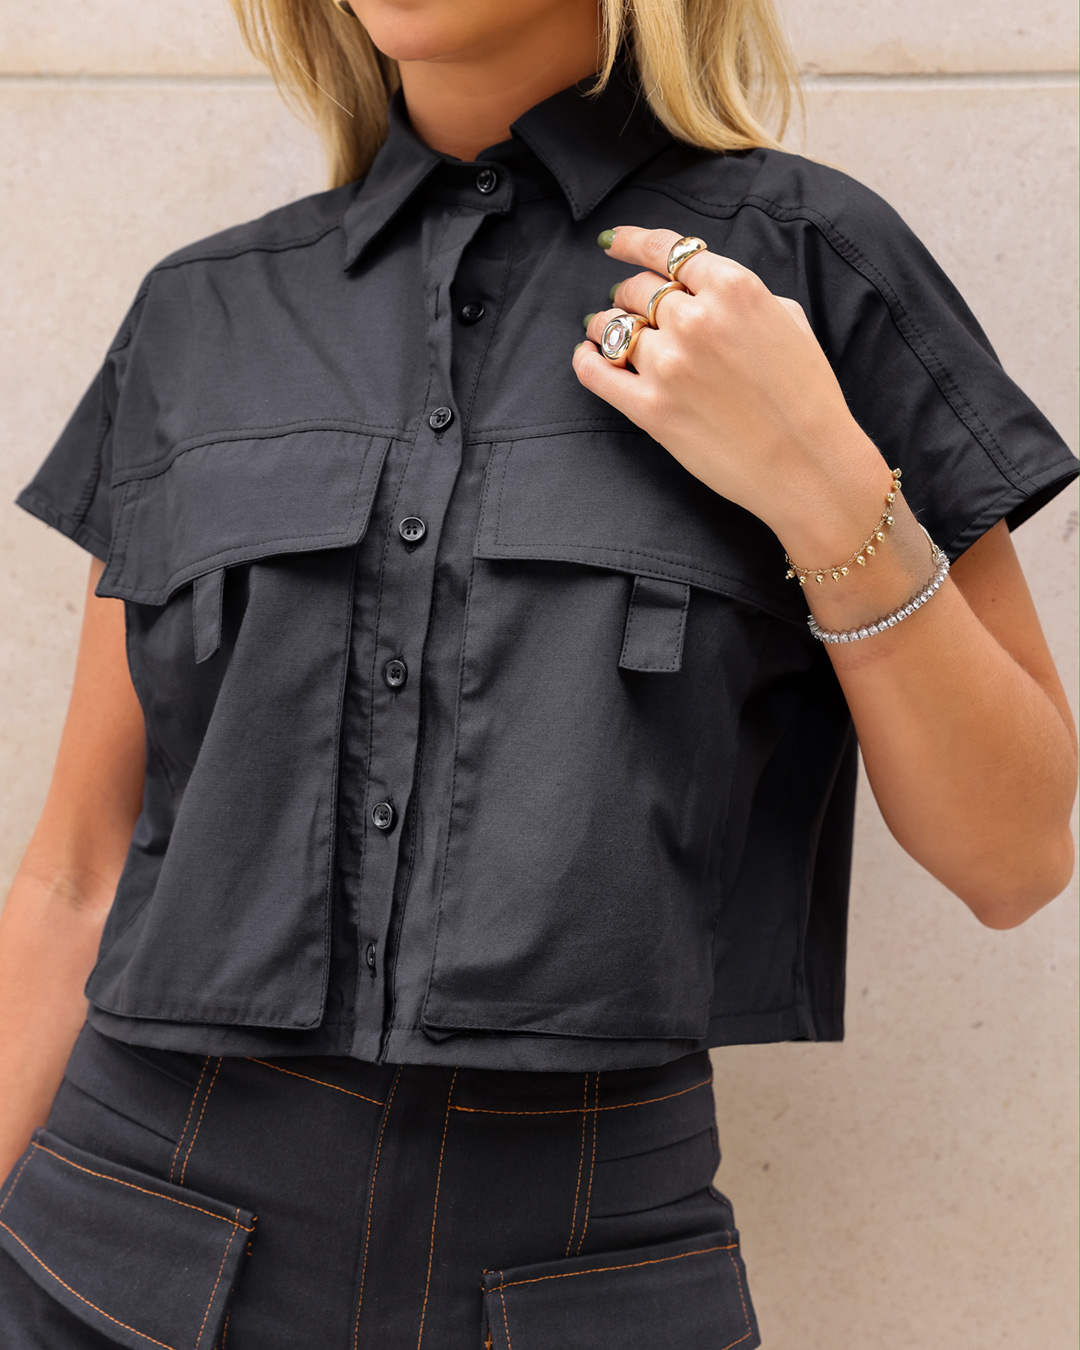 Dot Clothing - Cropped Dot Clothing Shirt Pockets Black - 2037PRETO